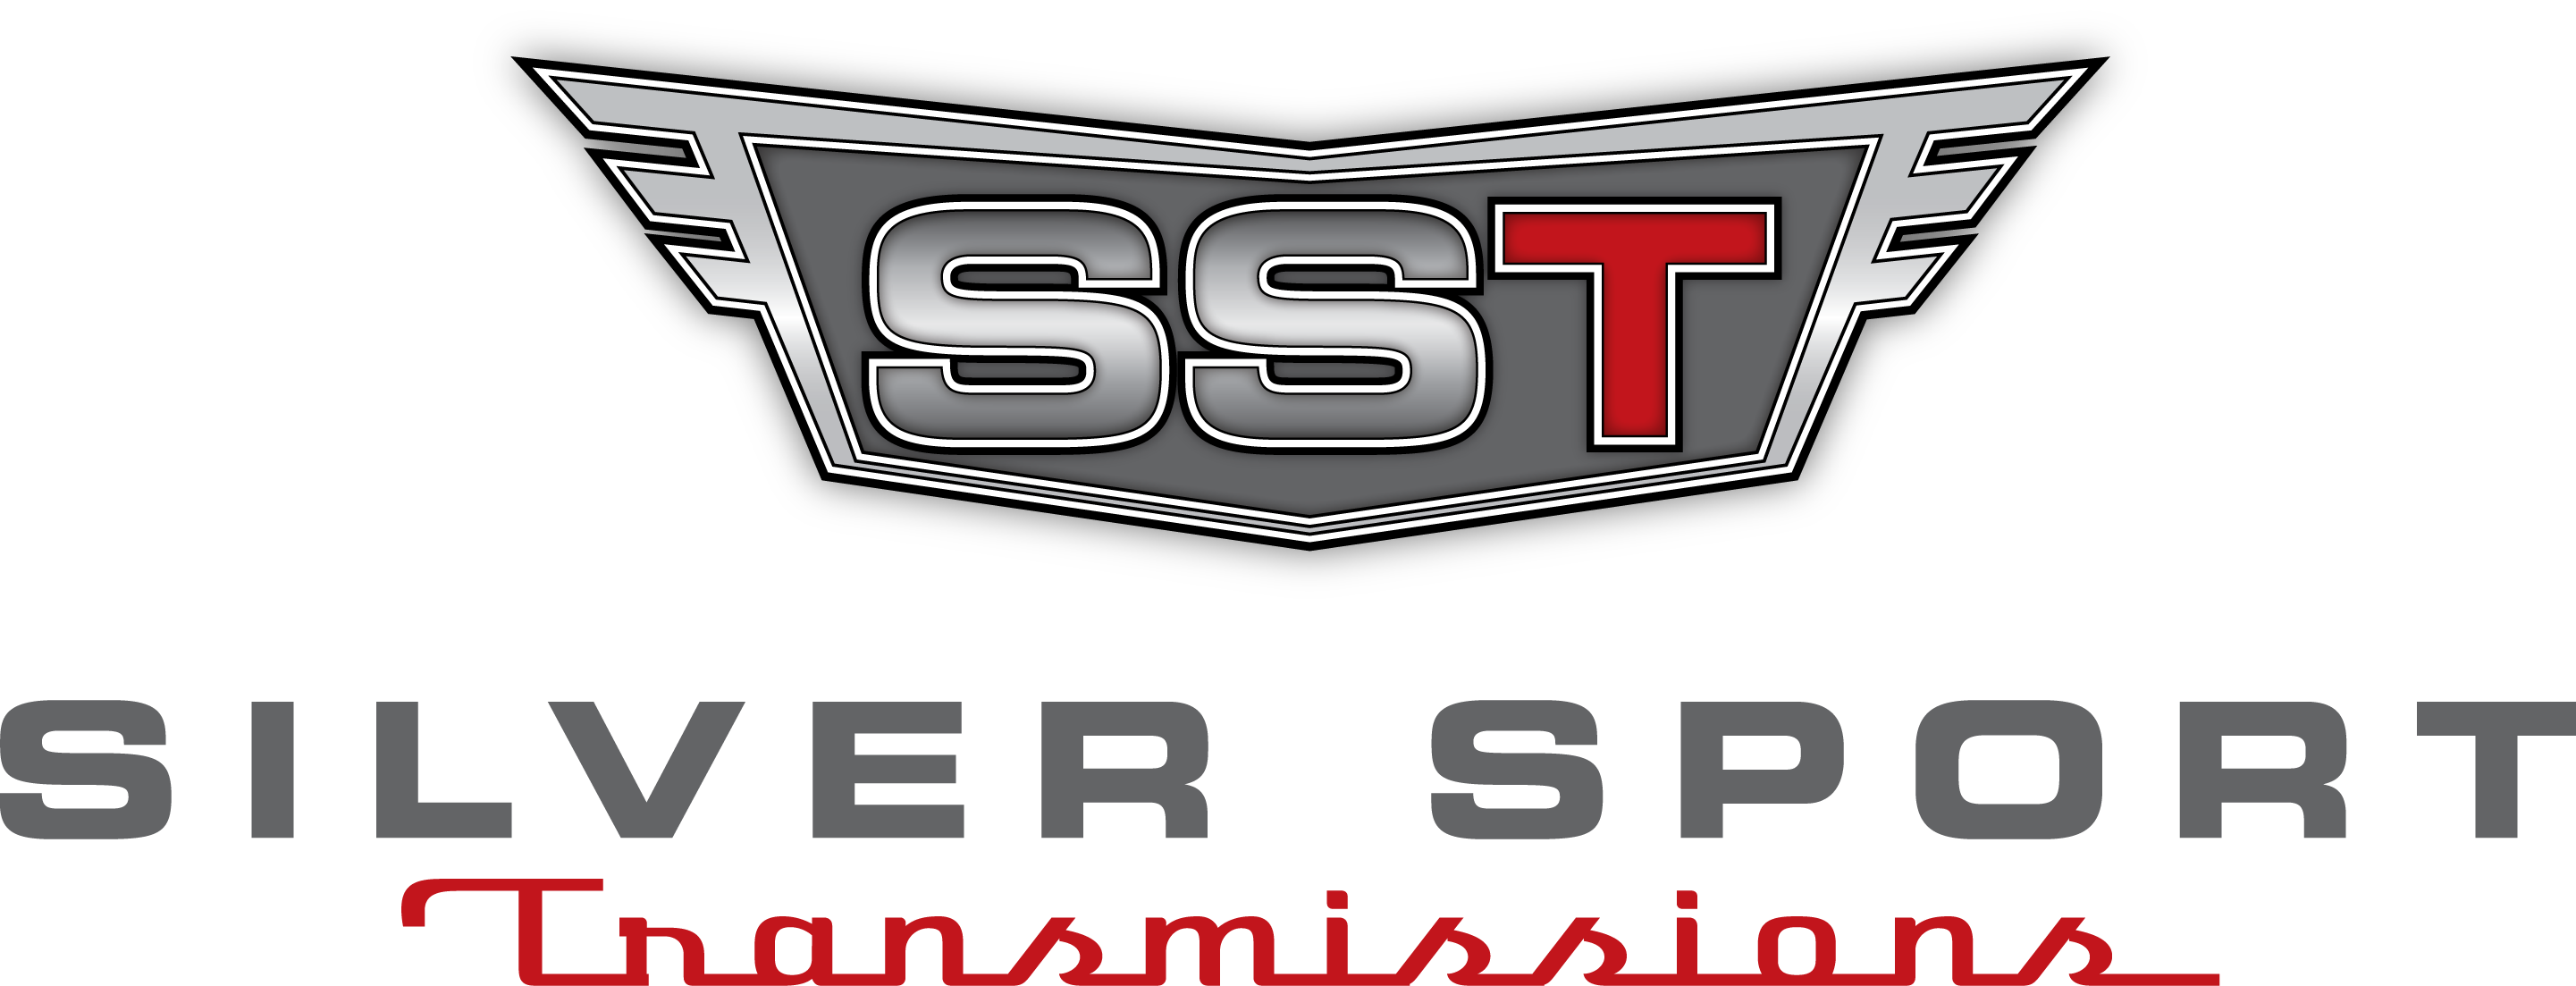 logo for silver sport transmissions